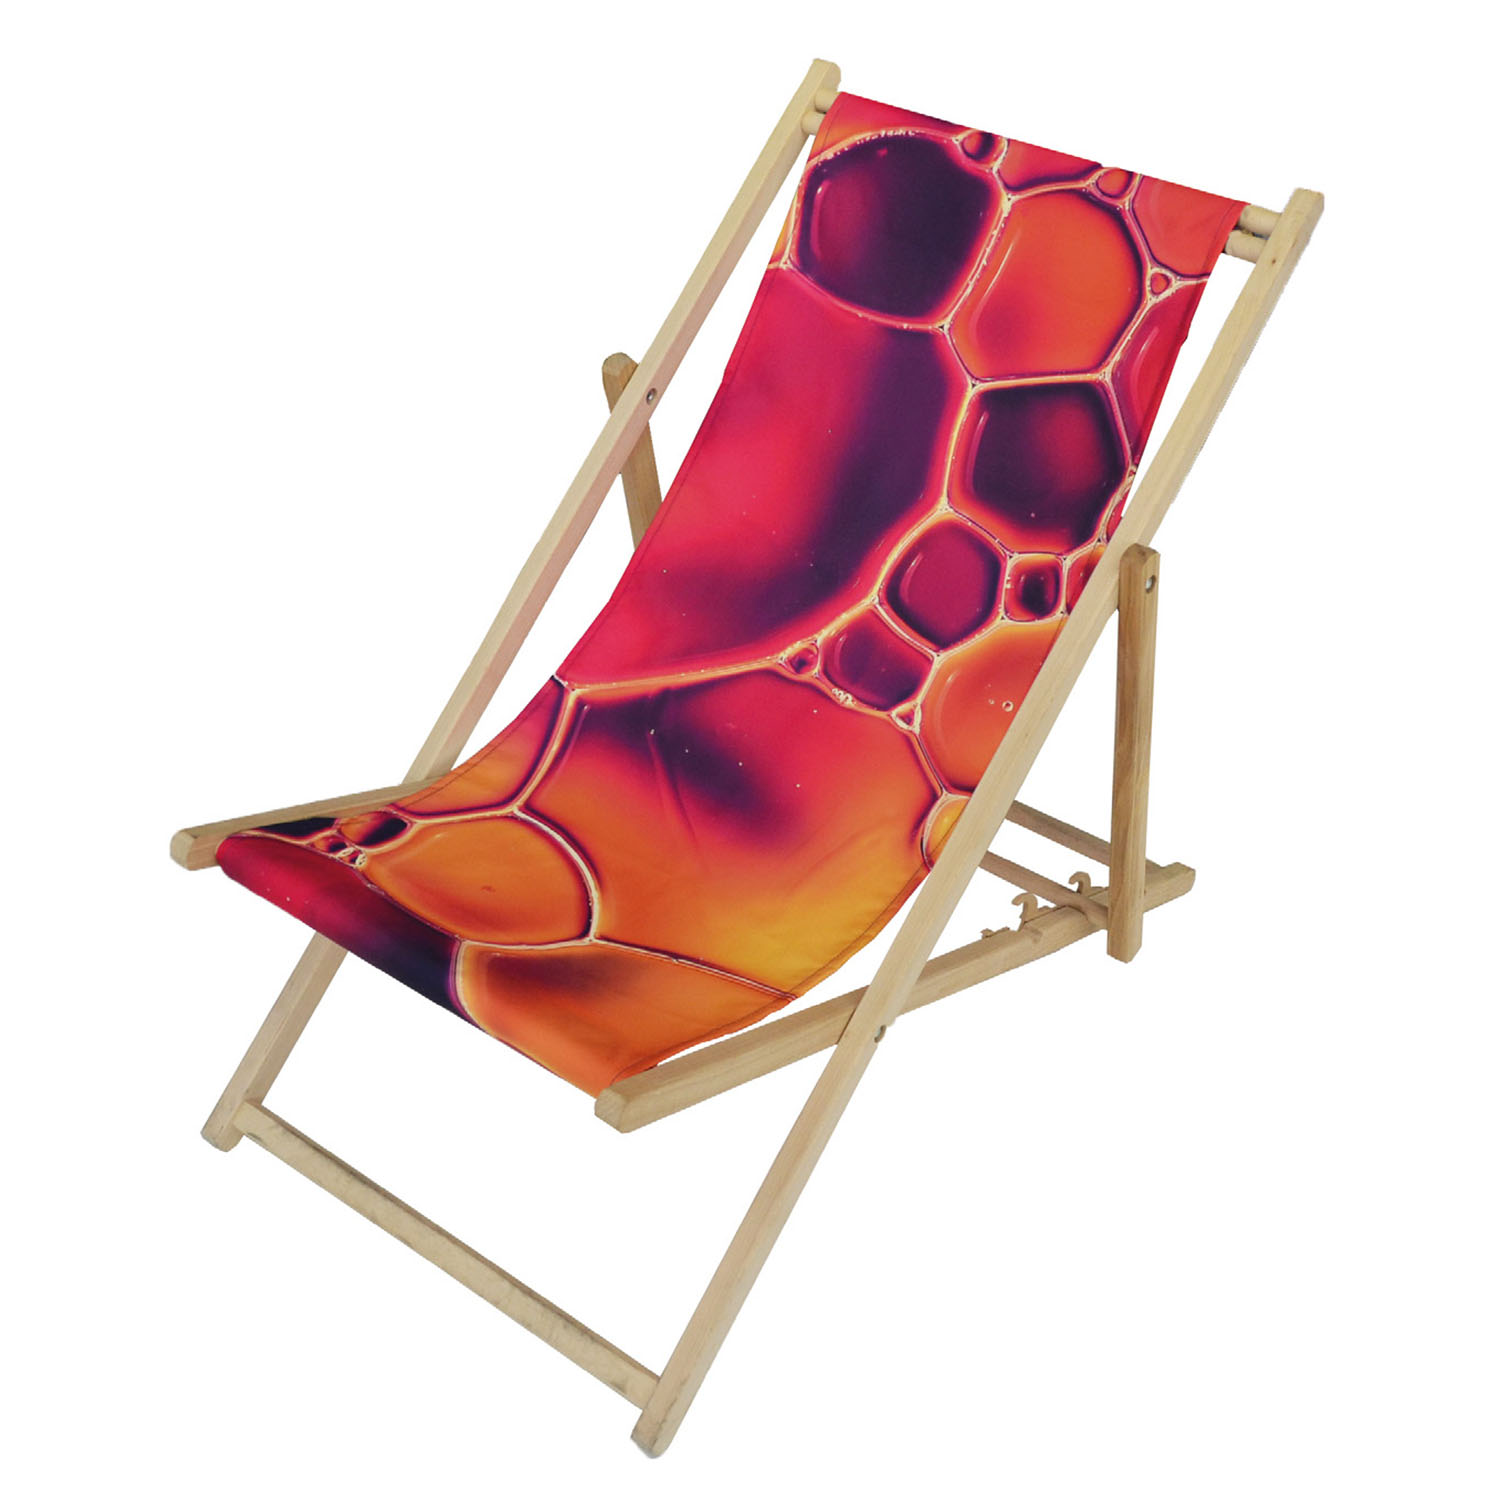 Custom Branded Deck Chairs - The Big Display Company